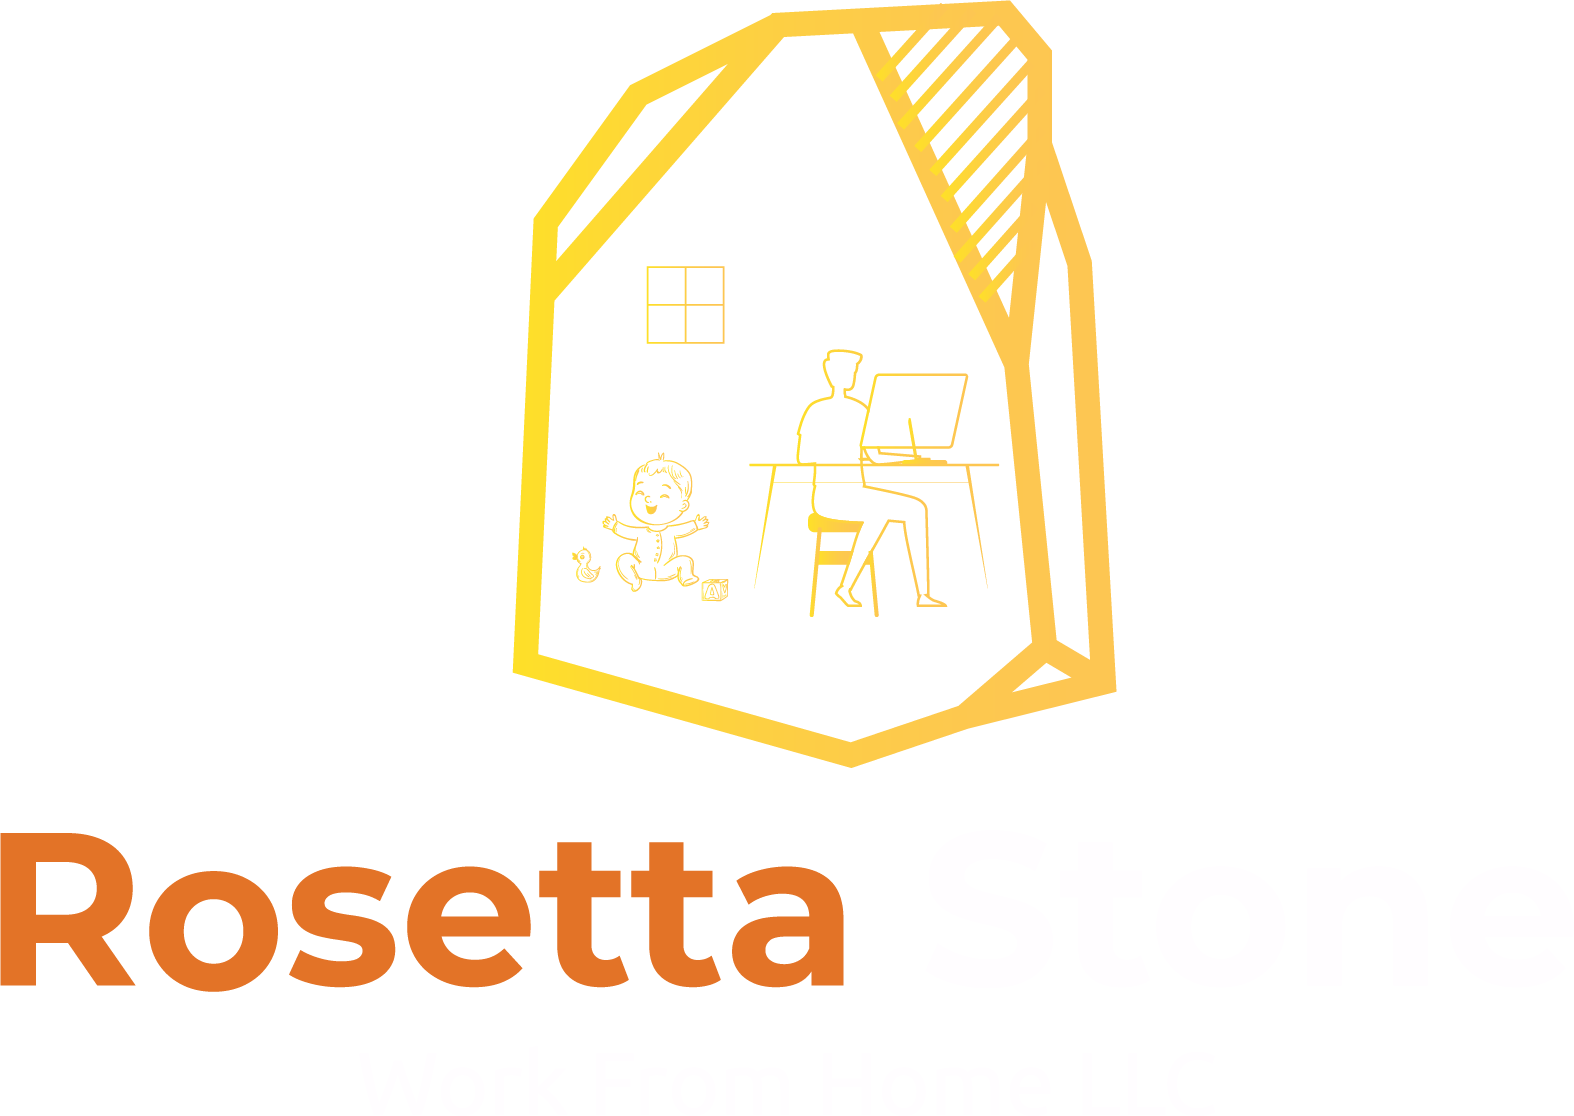 Rosetta Stone Work From Home LLC